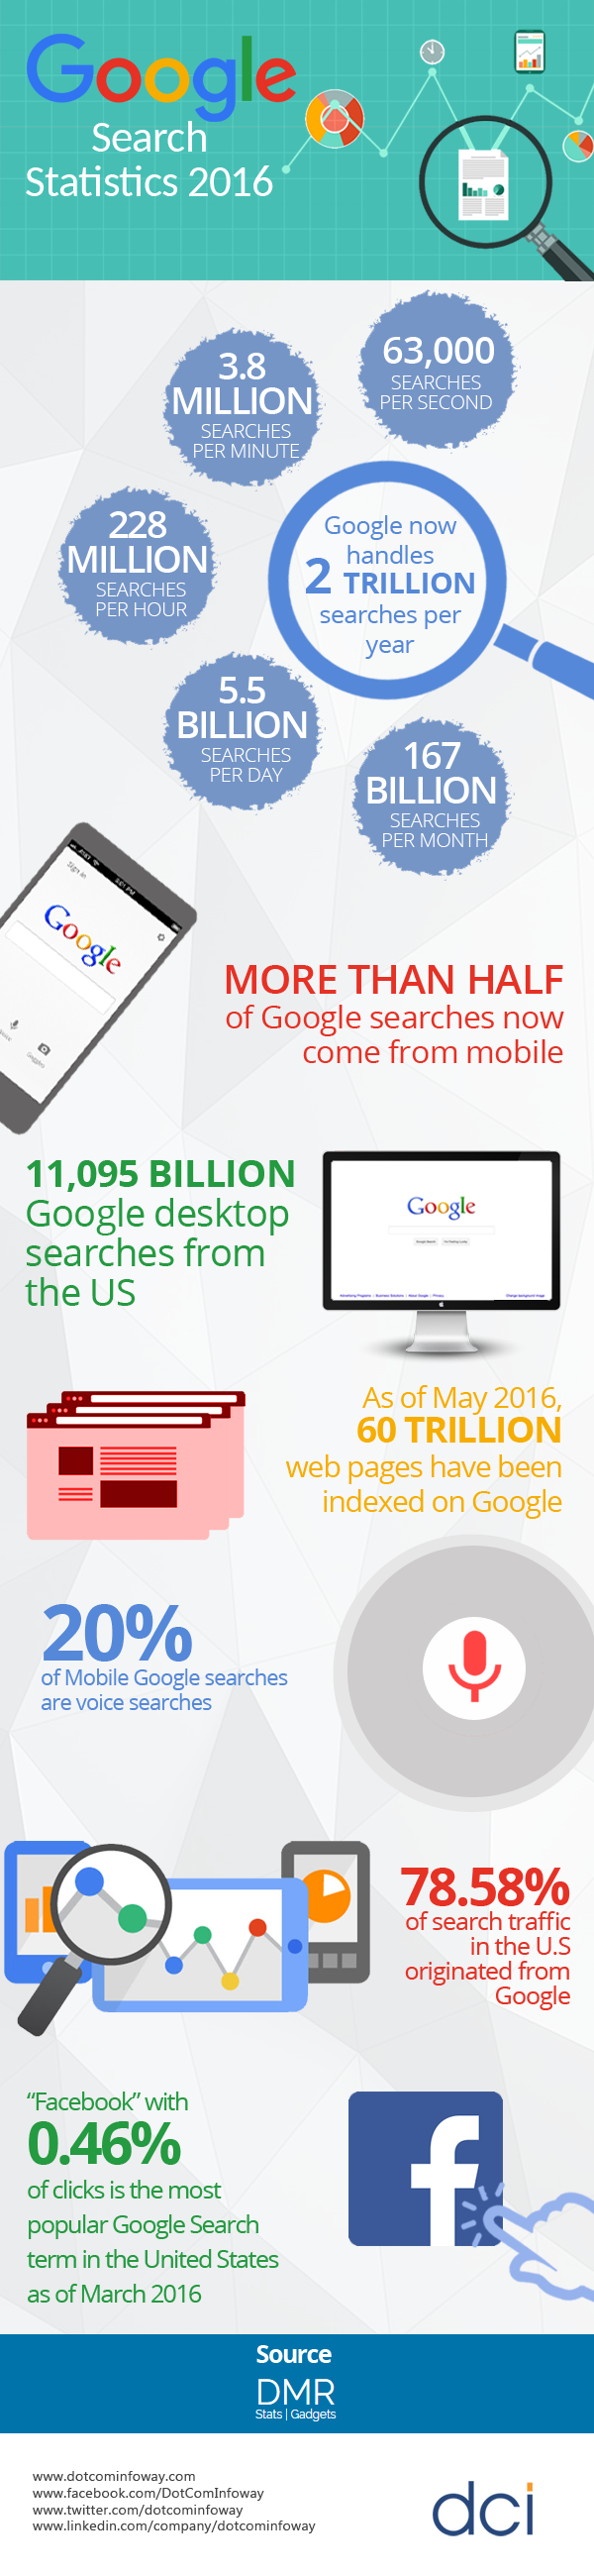 Google Search Statistics 2016 